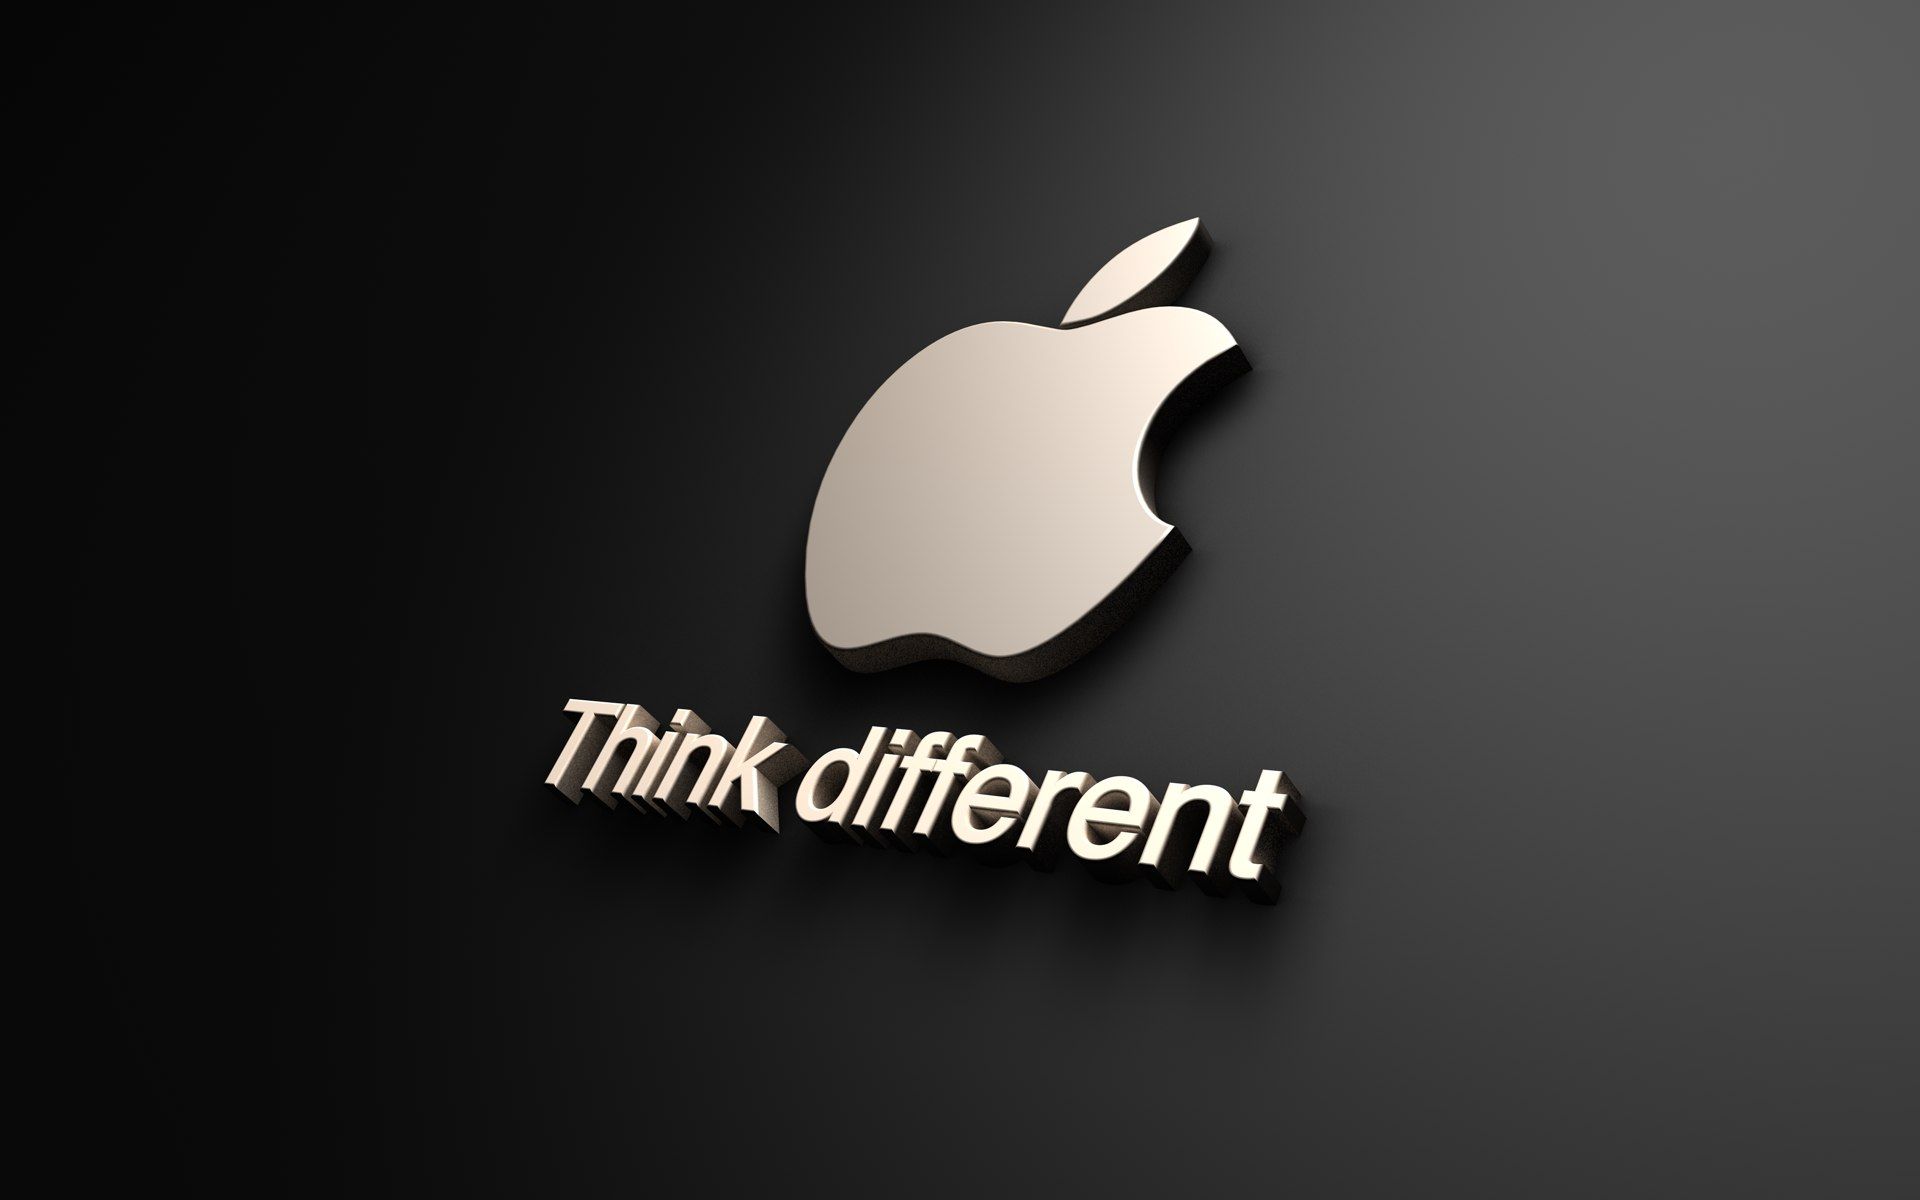 Apple Logo Wallpaper 7. Apple Logo .com